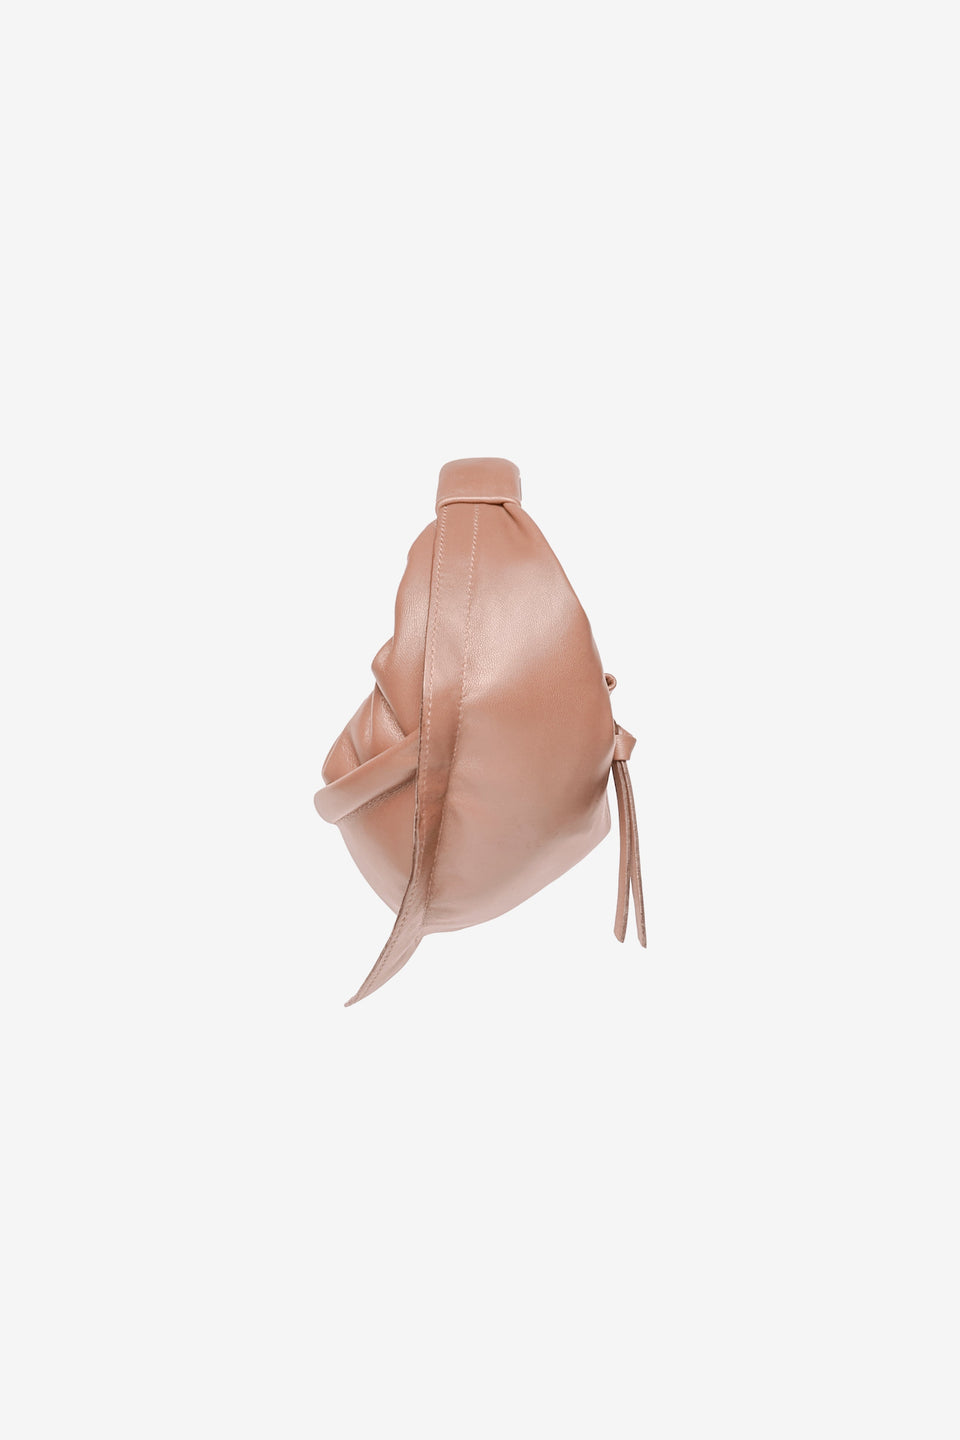 Mini Tortellino Bag Pink